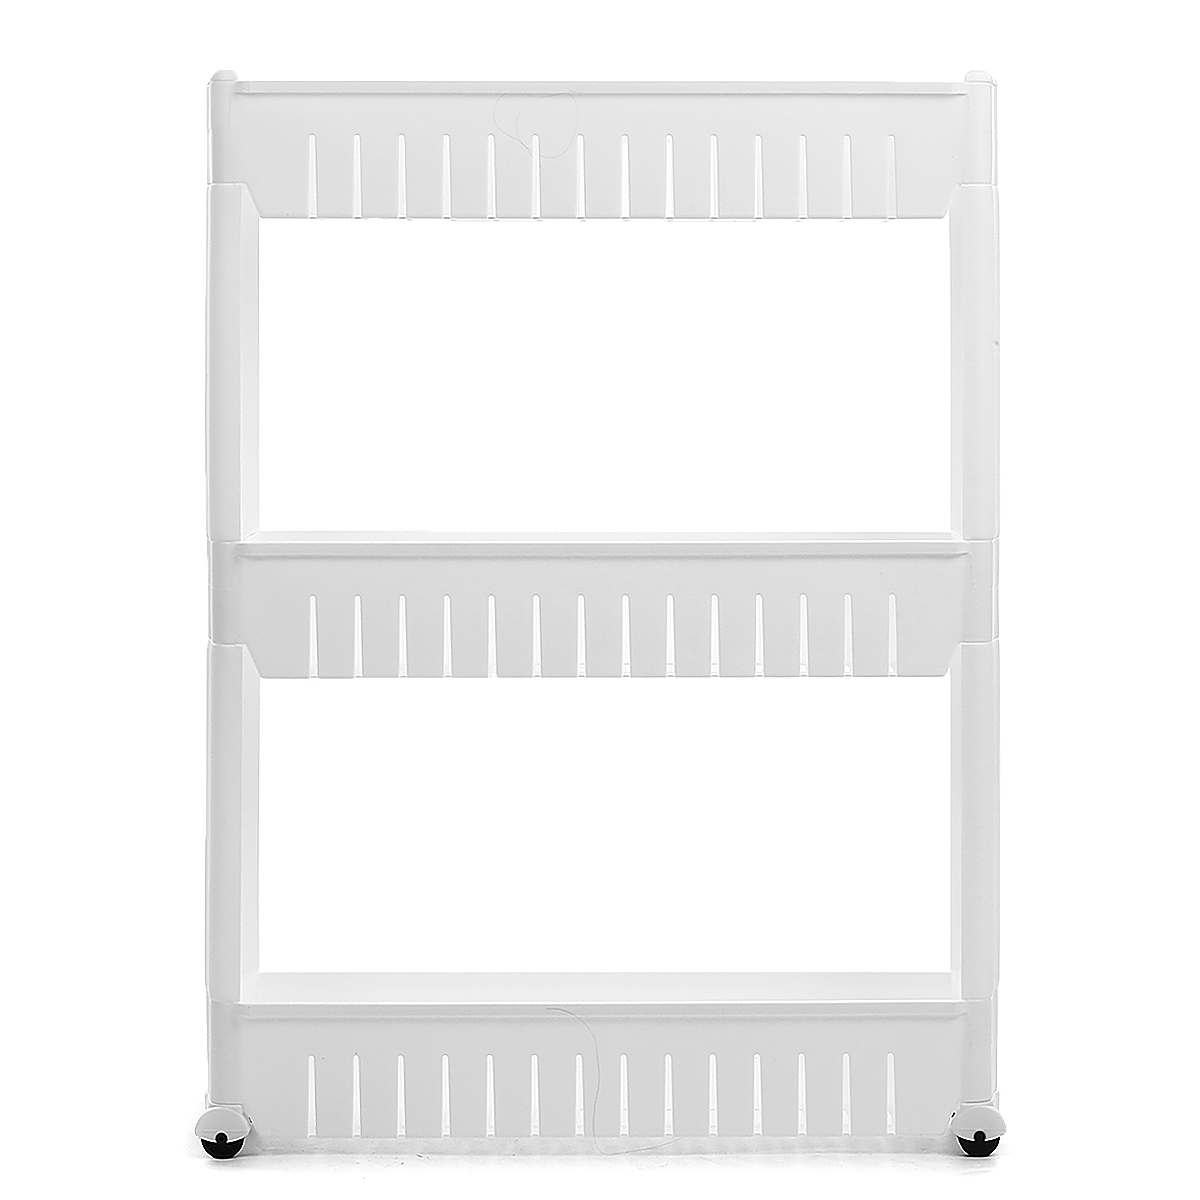 345-Tier-Slim-Slide-Out-Trolley-Storage-Holder-Rack-Organiser-Kitchen-Bathroom-1696979-10